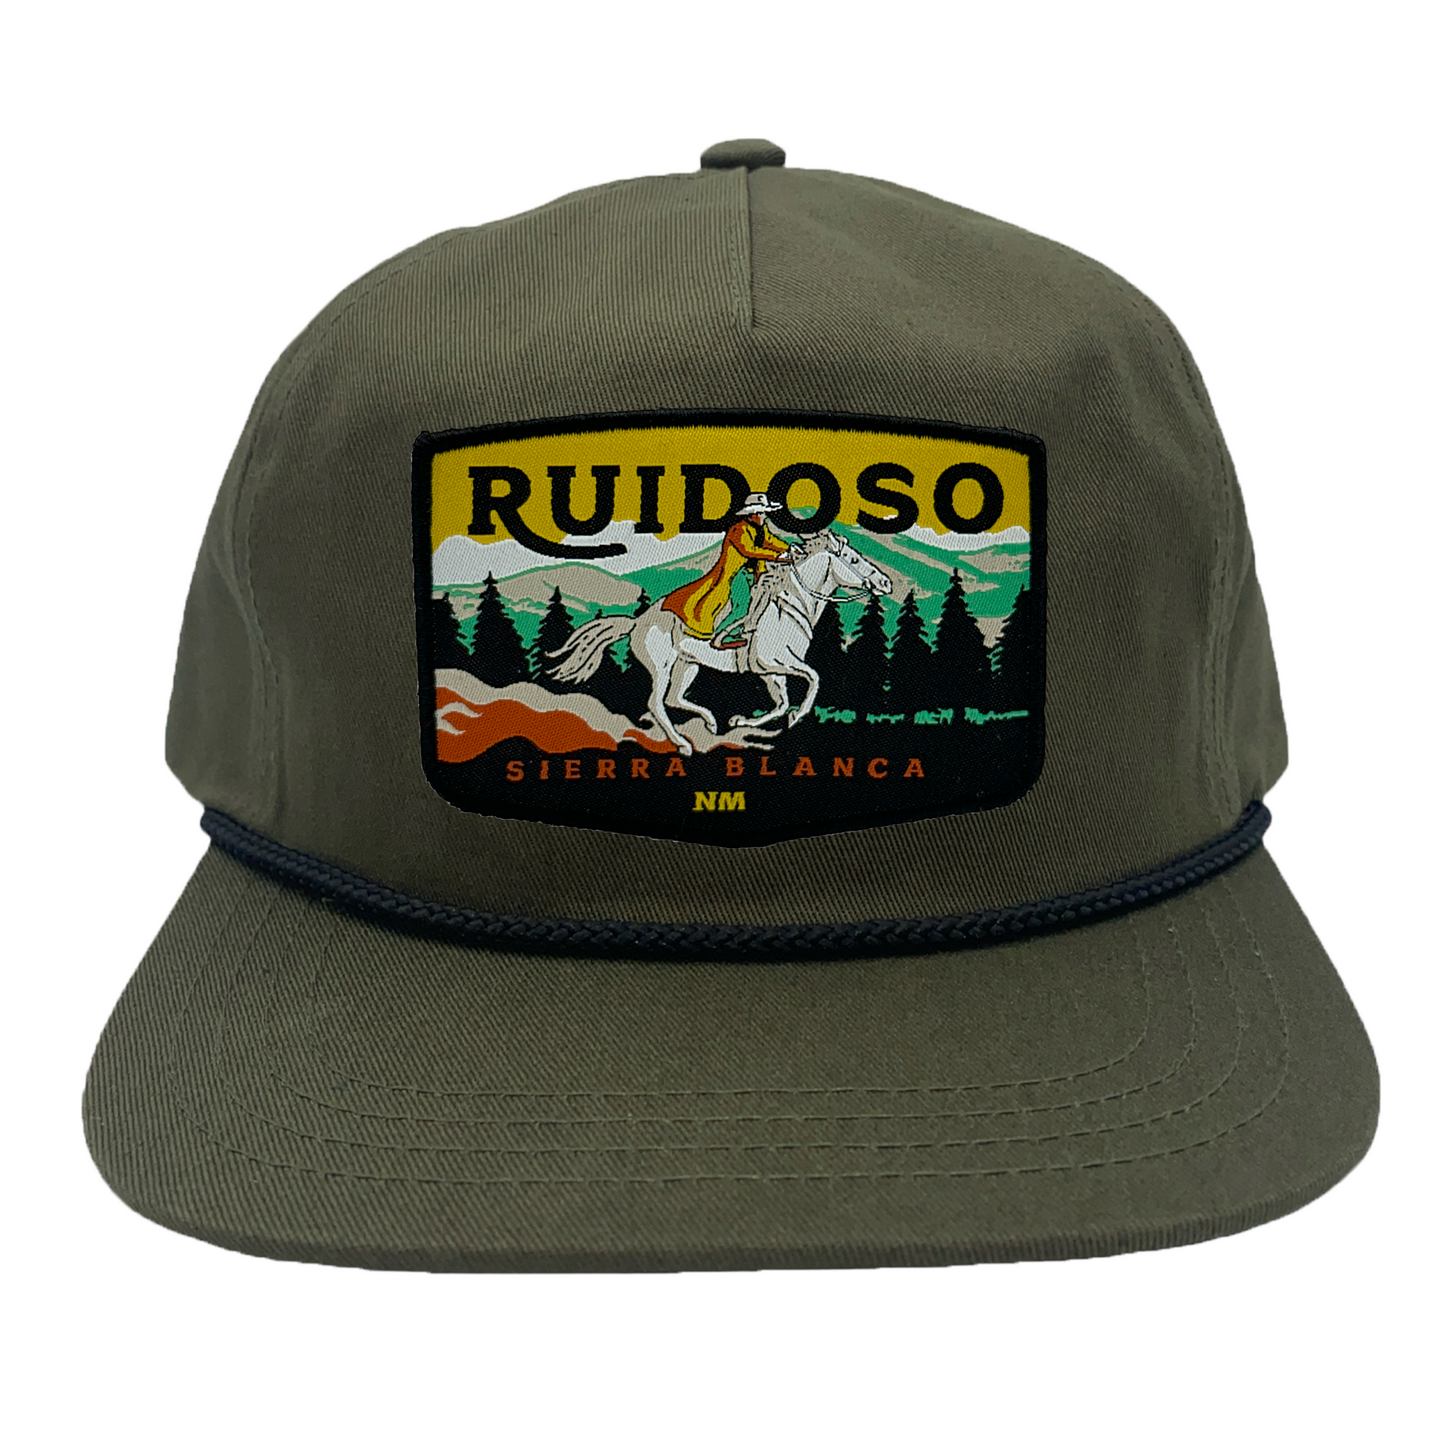 Ruidoso, NM Snapback - Rider Edition